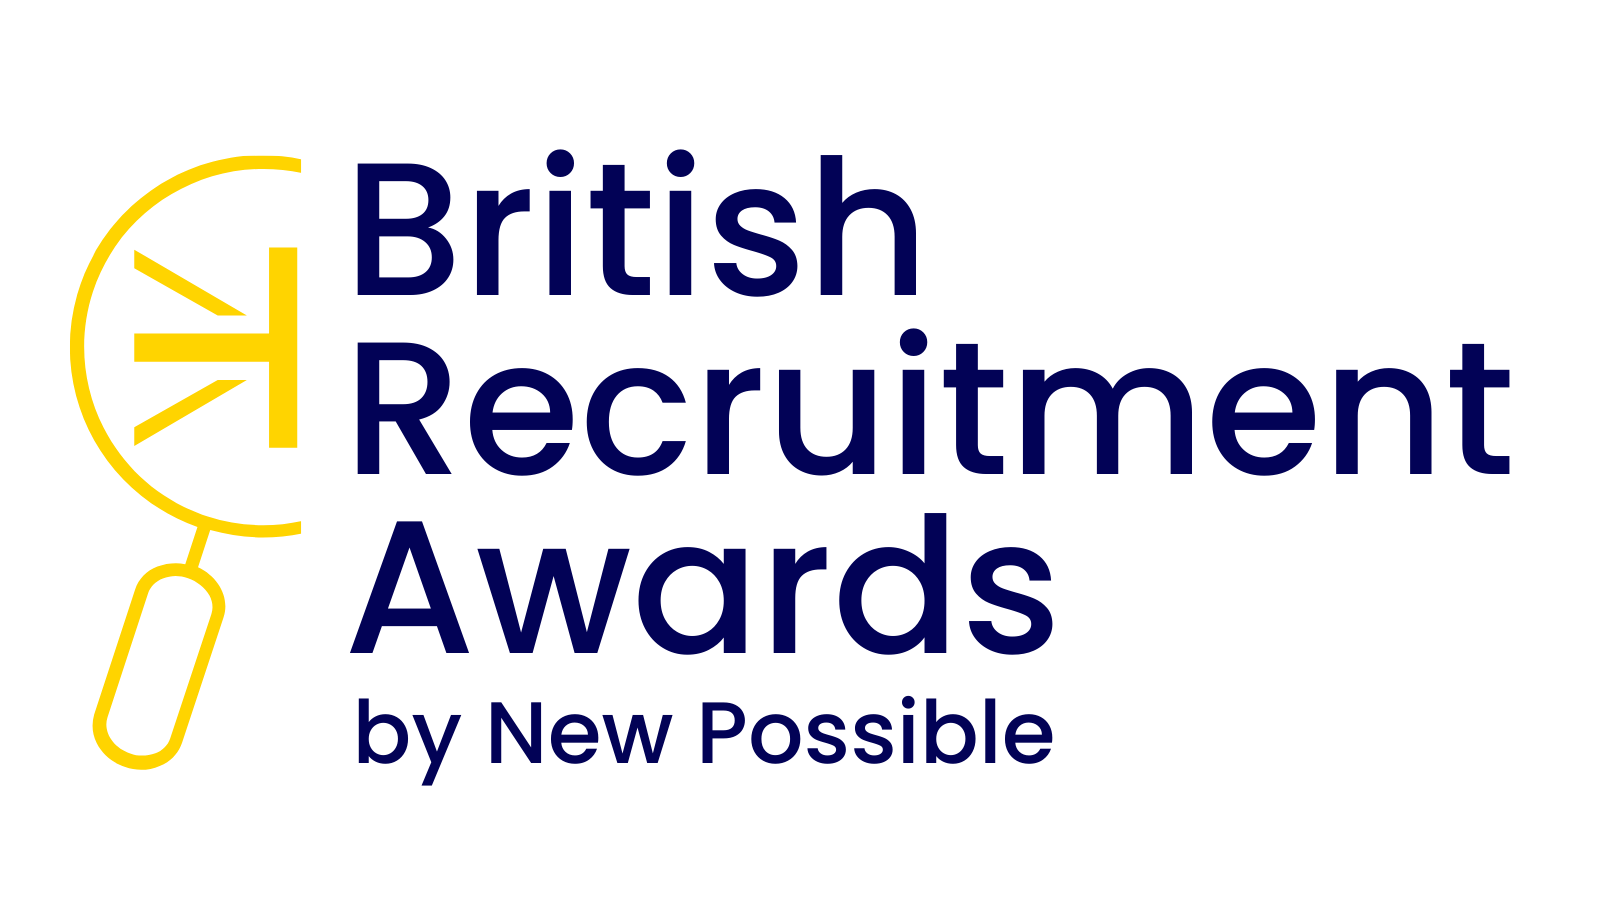 British Recruitment Awards Logo